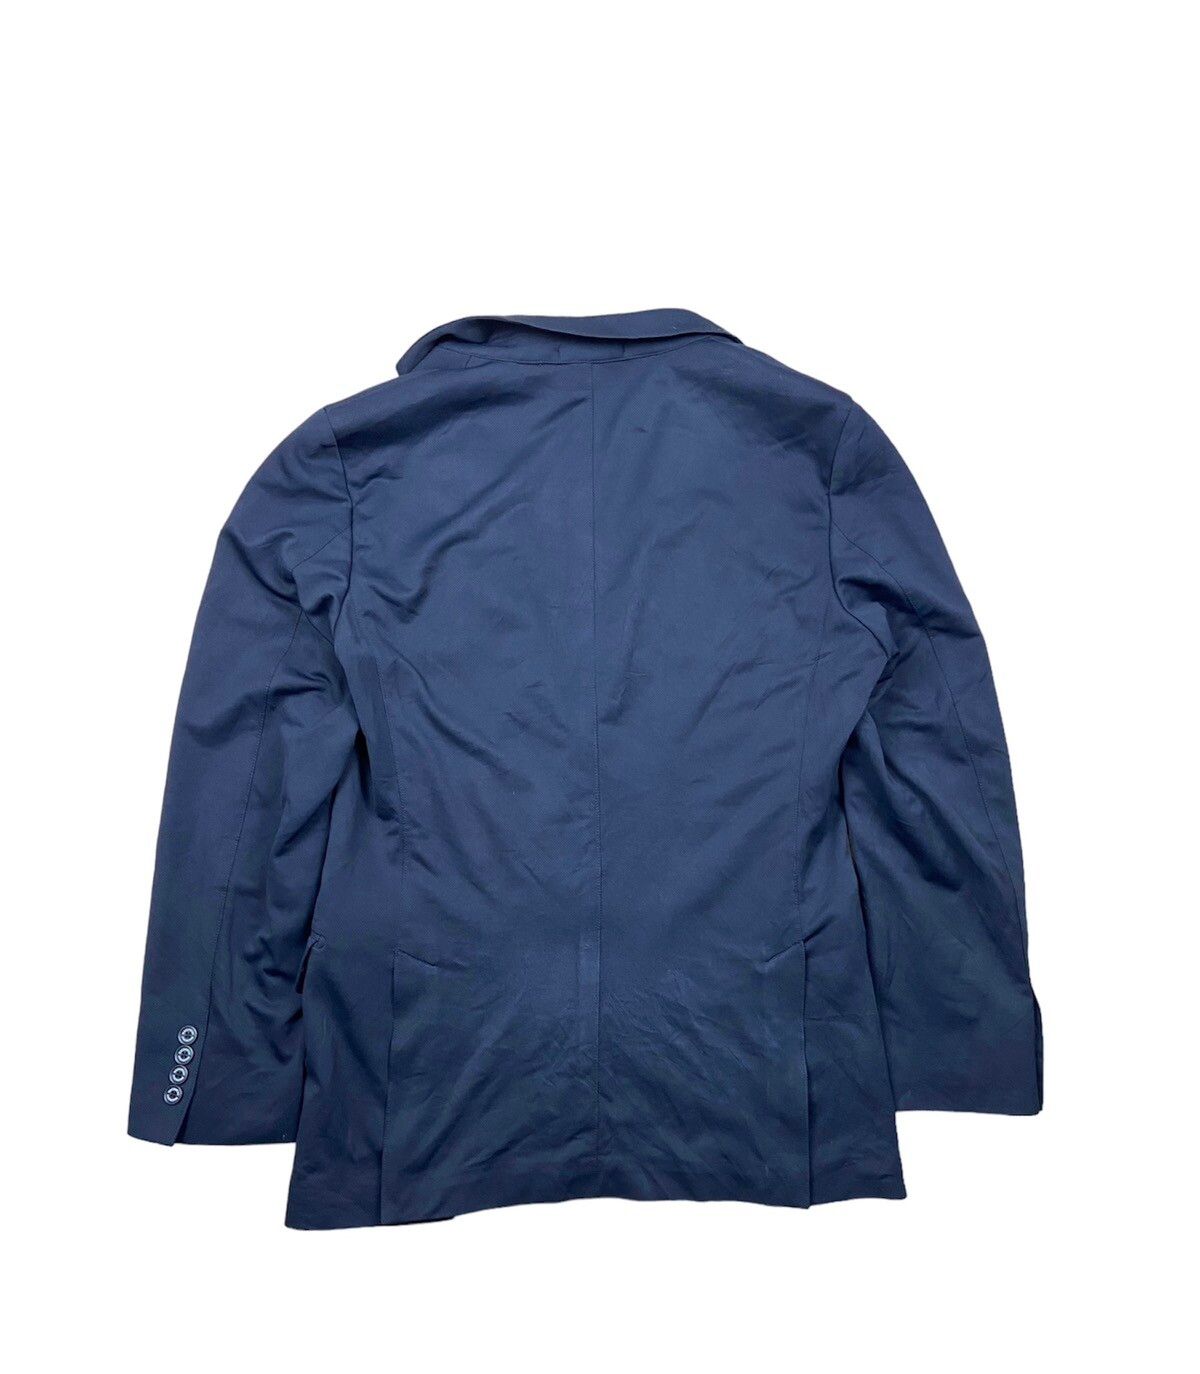 Mackintosh Vintage Mackintosh Philosophy Trotter Jacket Size 40R - 4 Thumbnail